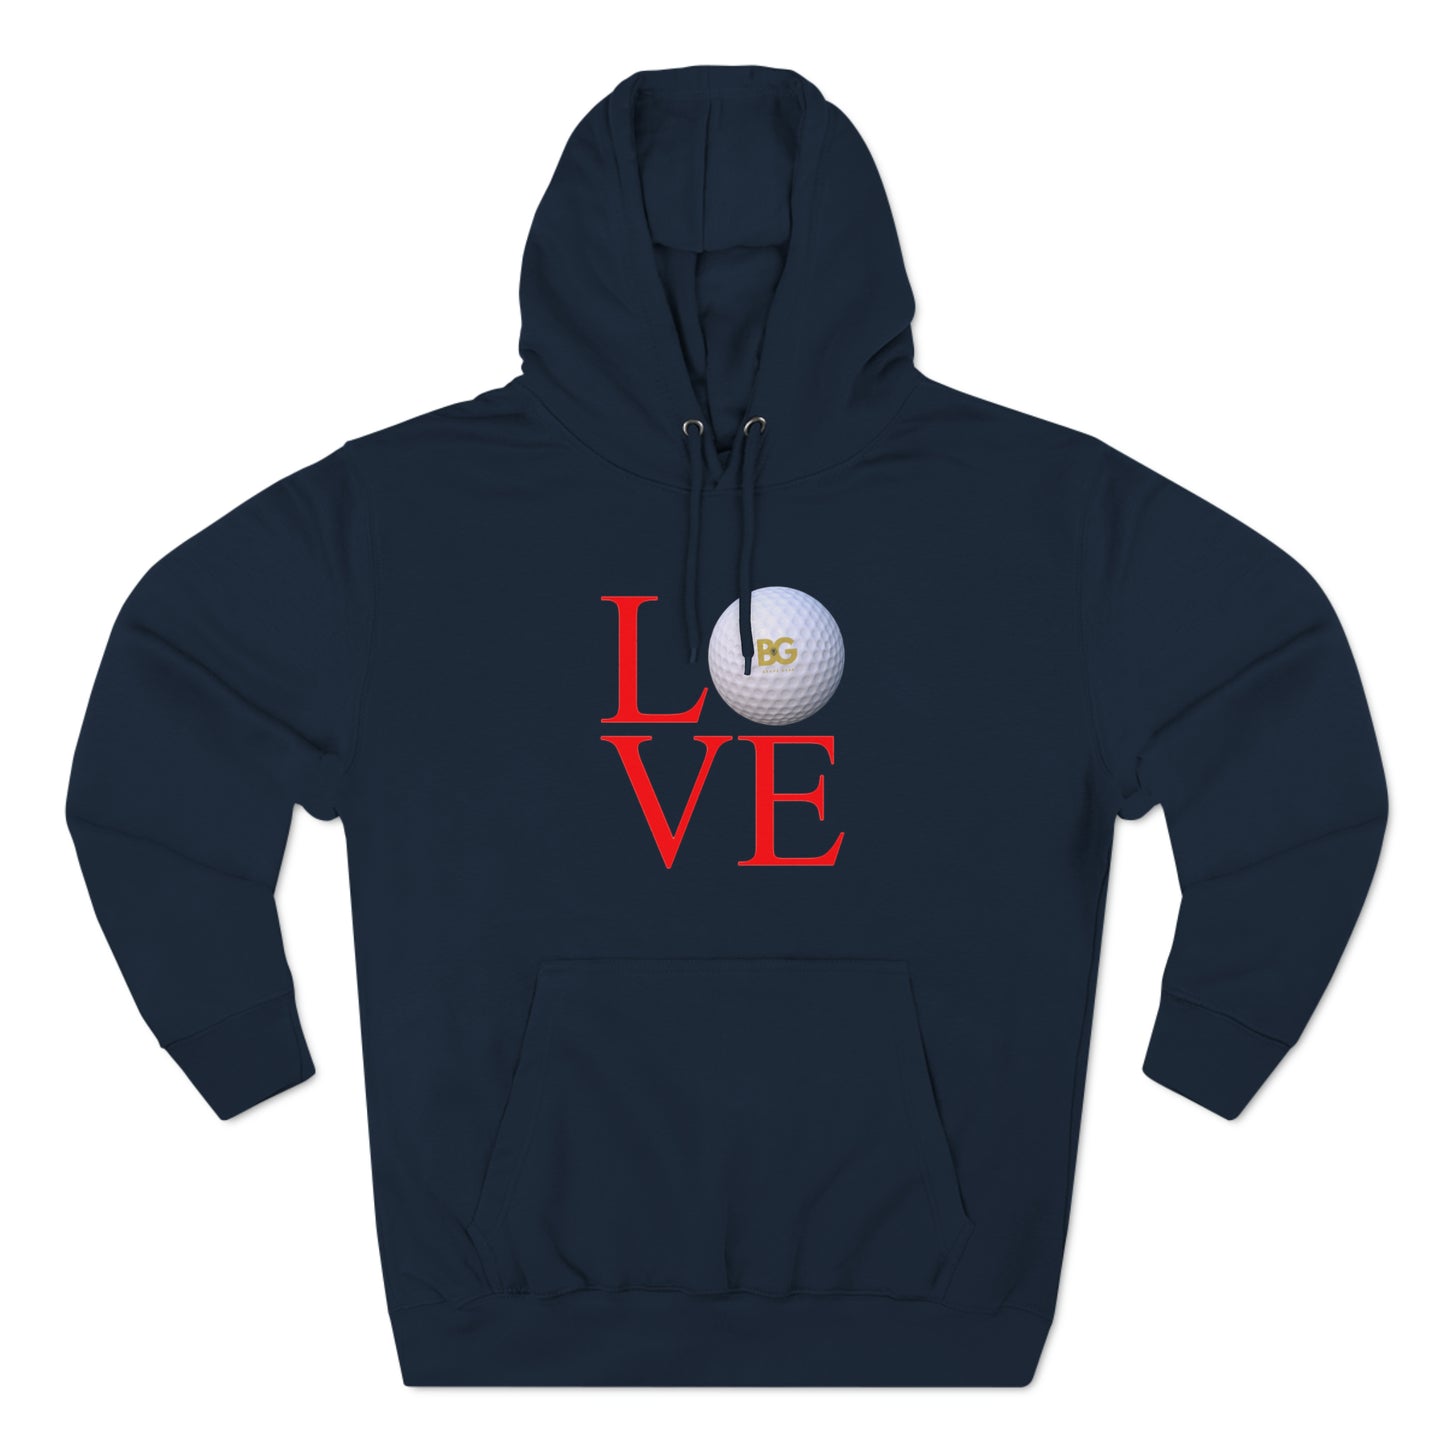 BG "LOVE golf" Premium Pullover Hoodie